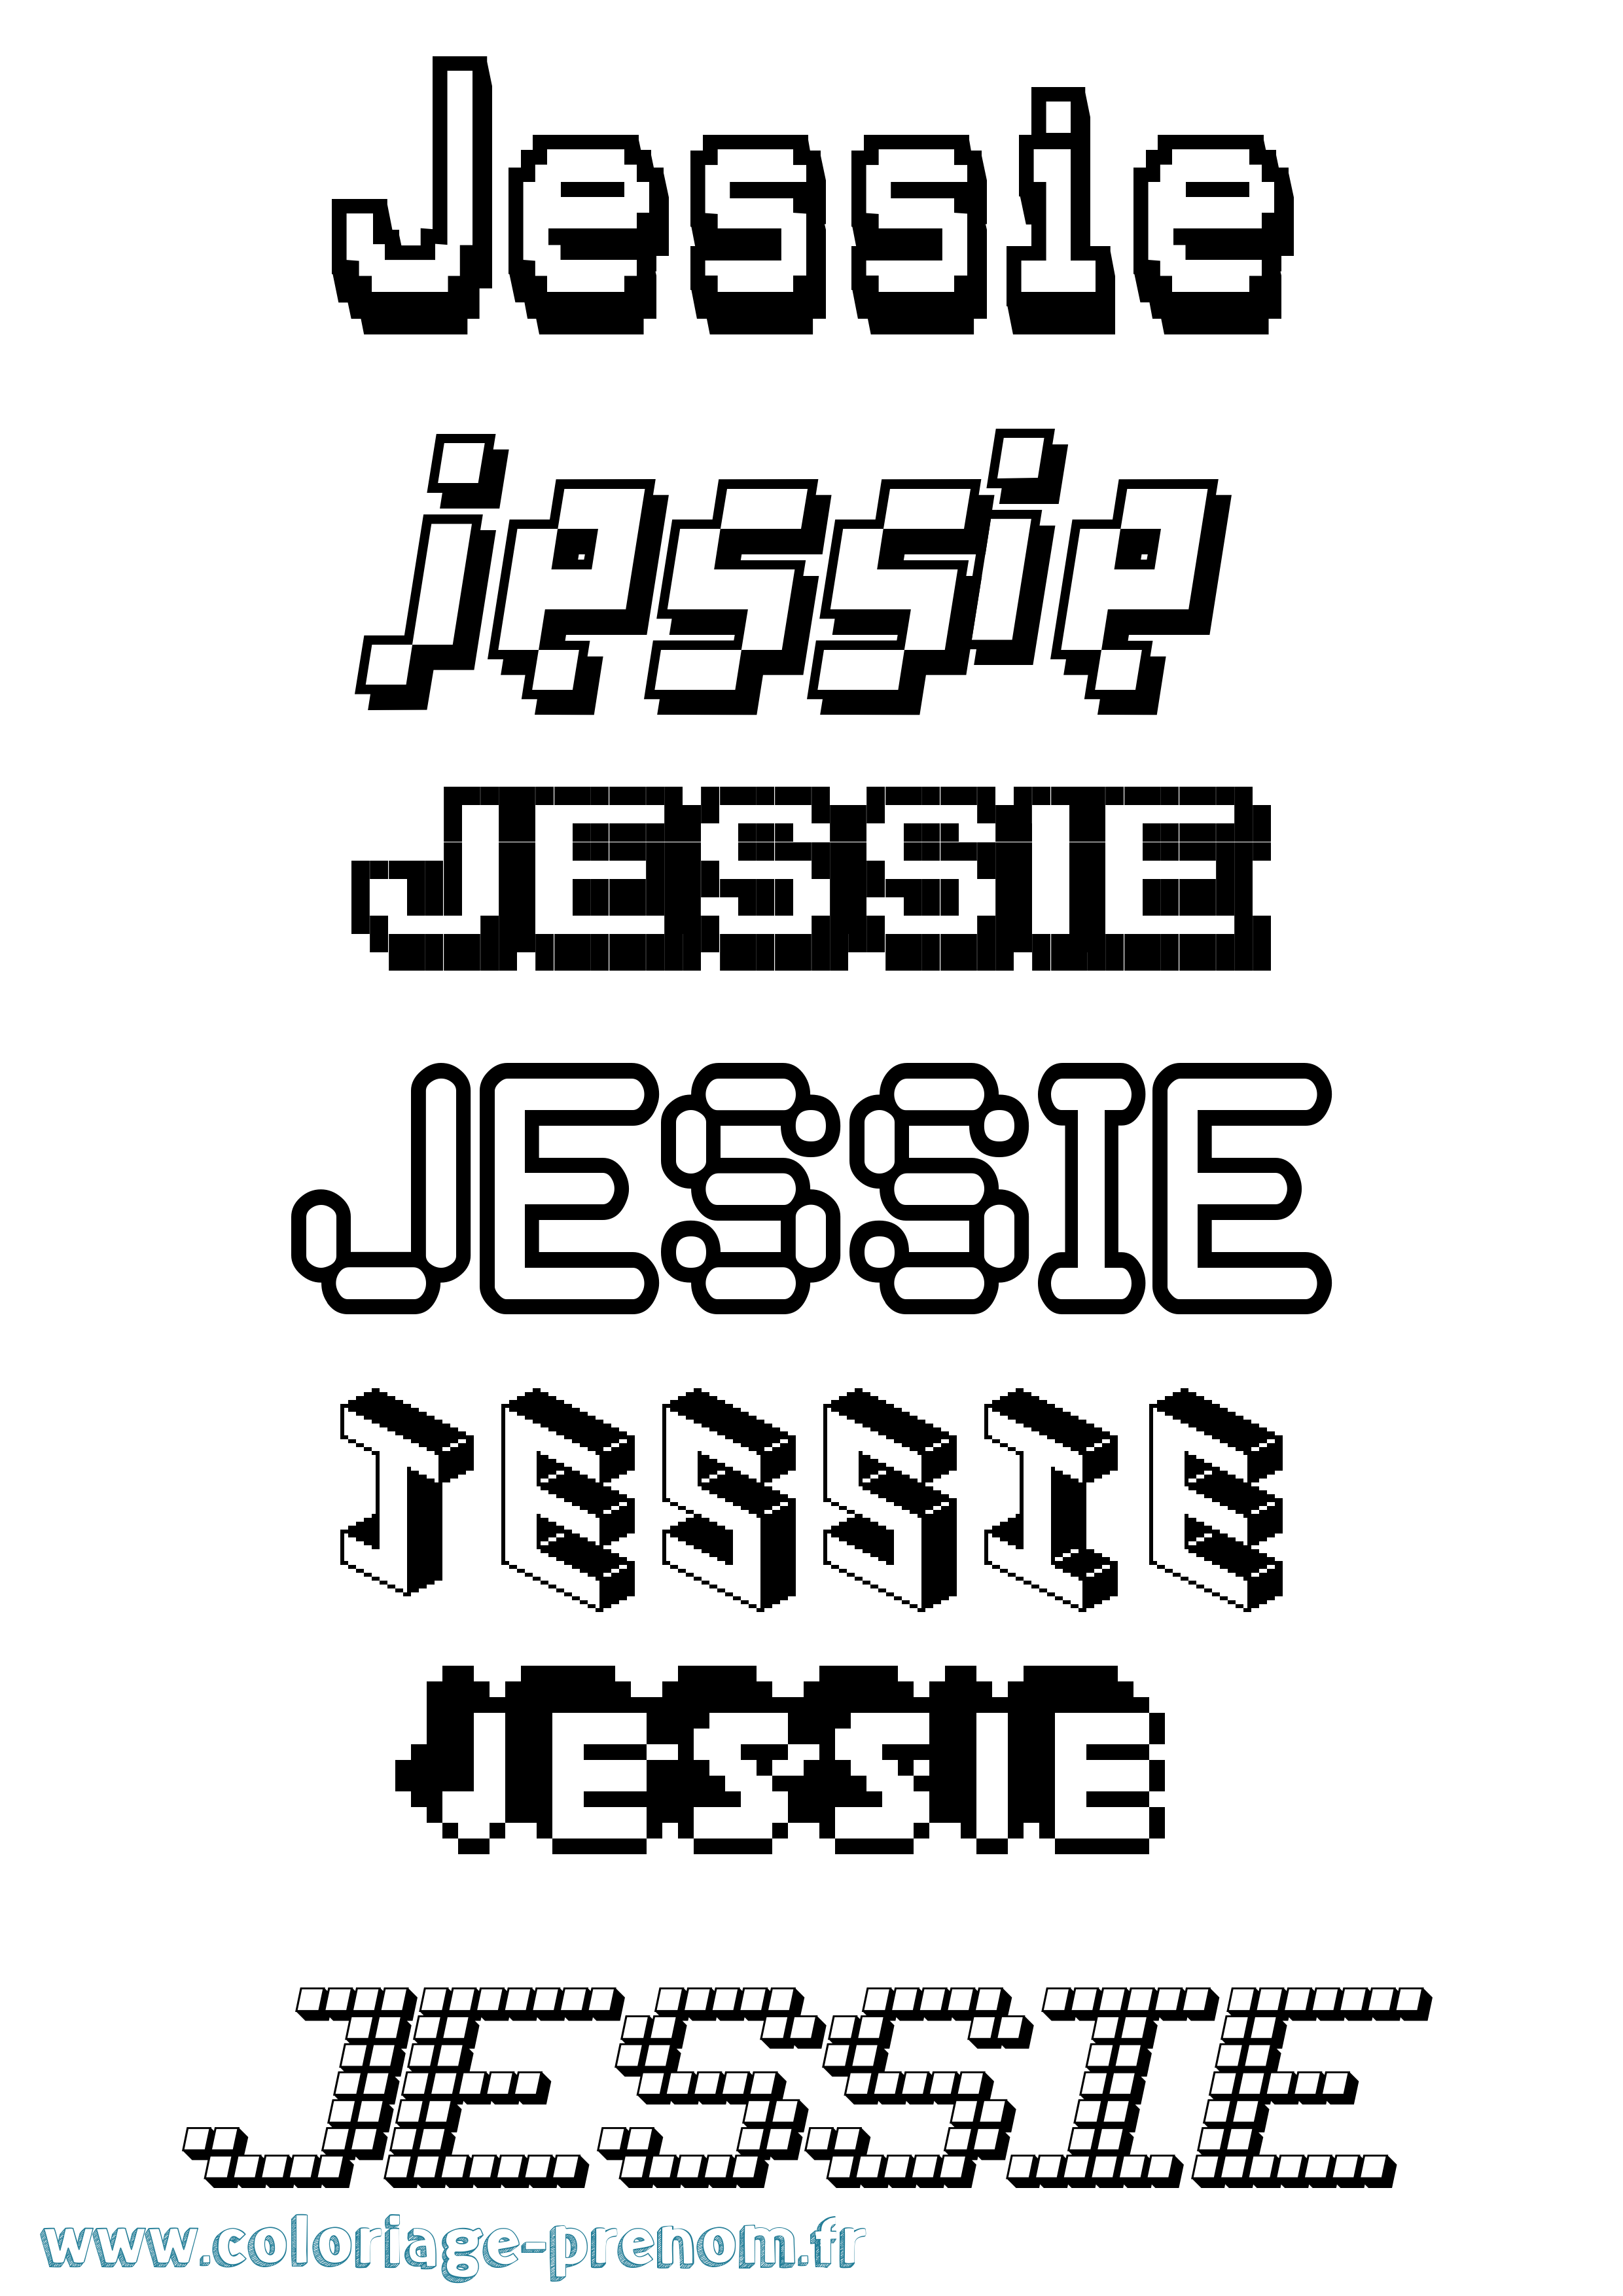 Coloriage prénom Jessie